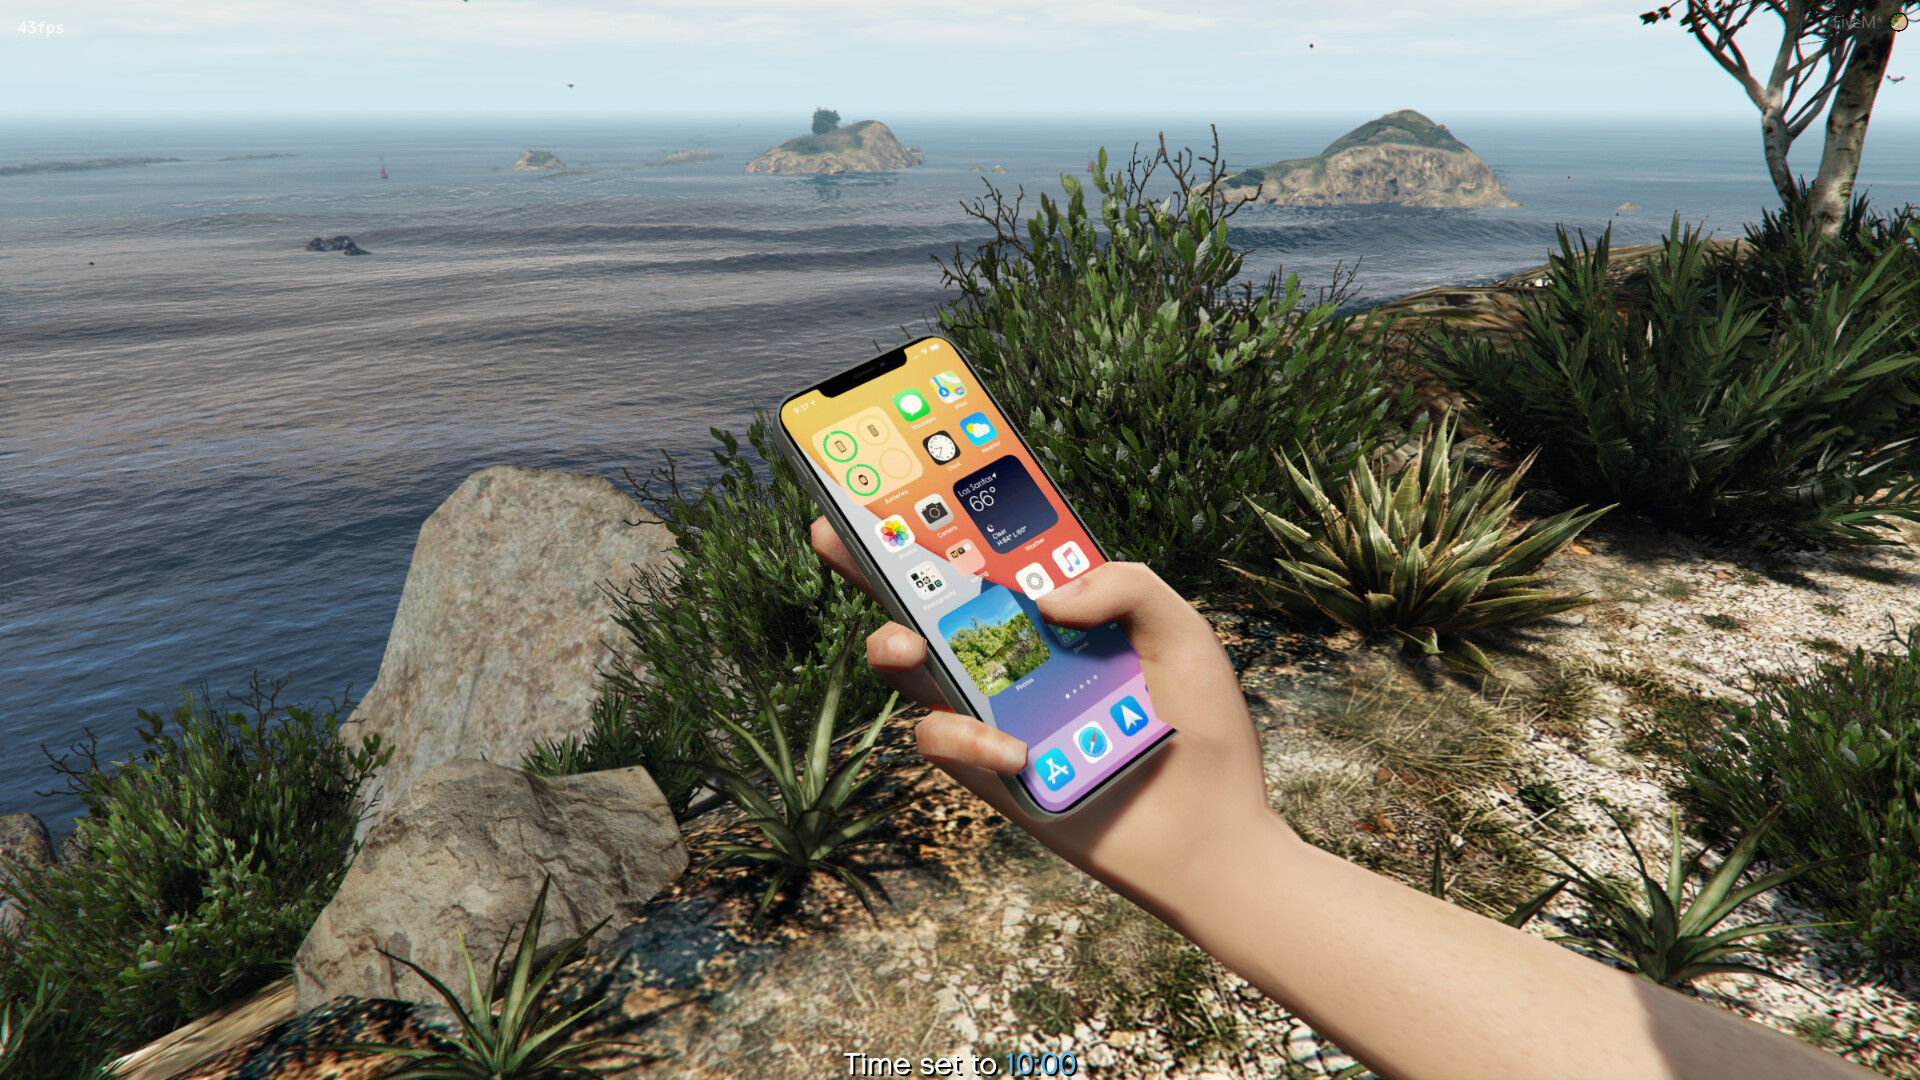 GTA V iFruit phone concept render revealed